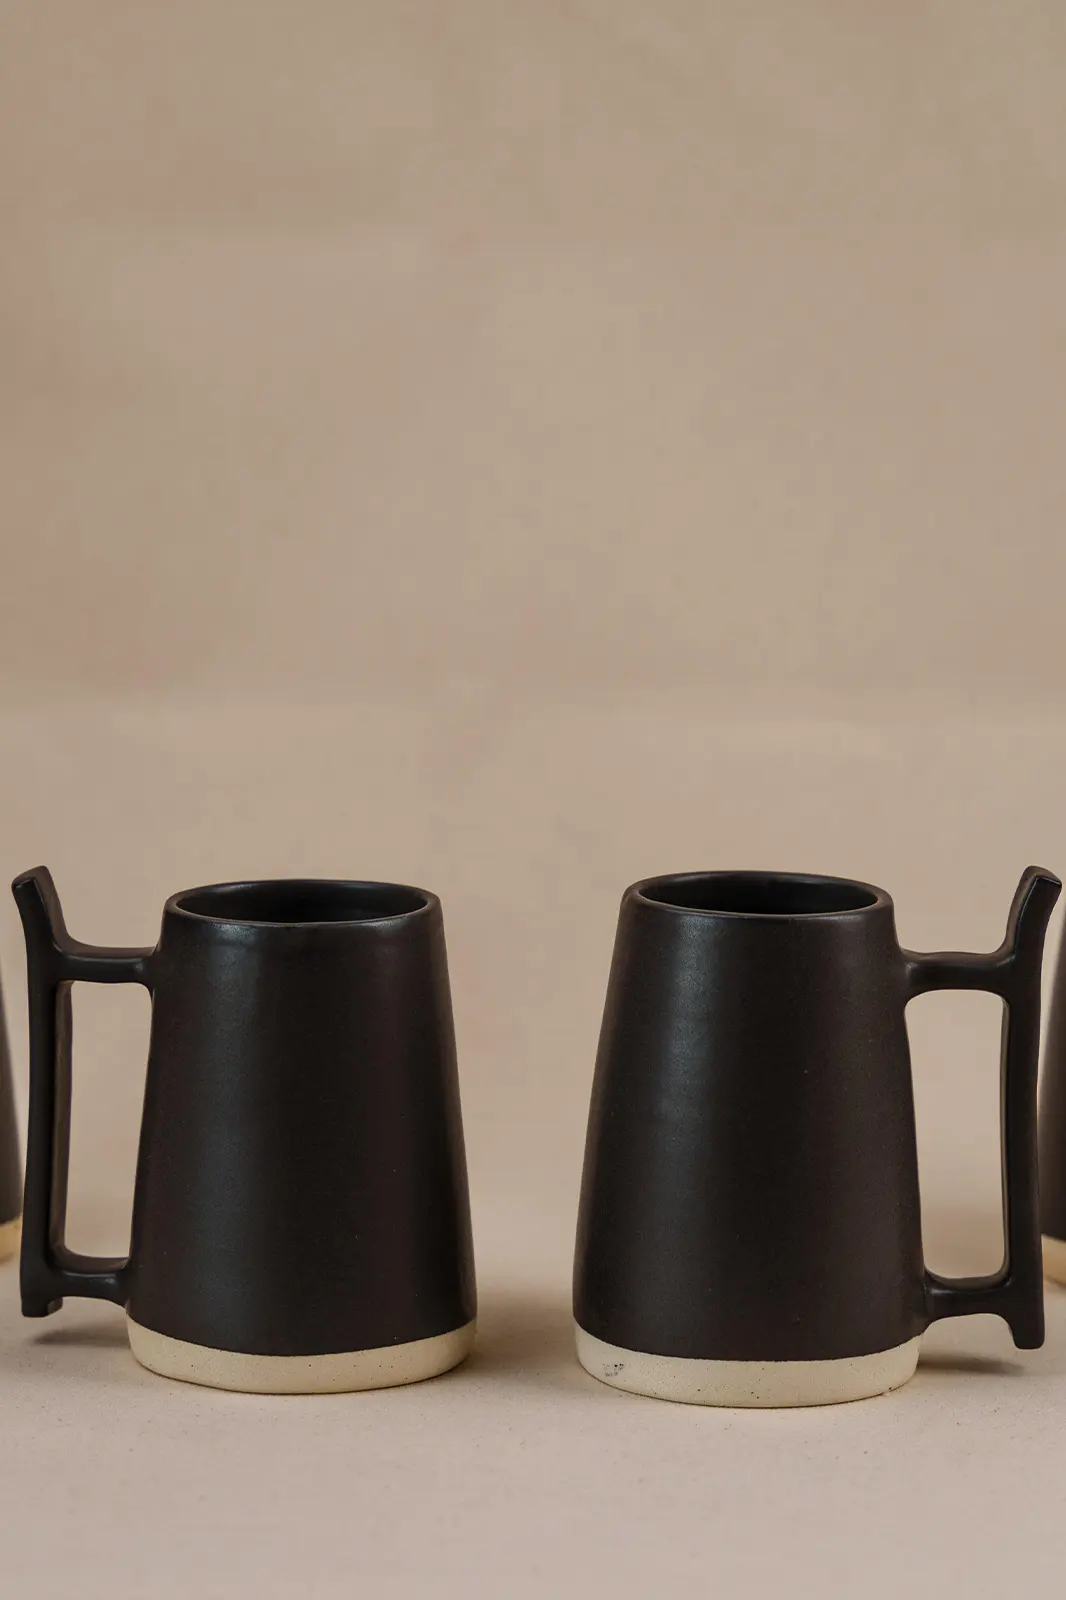 Set of 4 ceramic beer mug milk pitcher tea coffee mug matte black, milk pitcher, tea pitcher, coffee mug, coffee mug set of 4, ceramic mug, ceramic beer mug, ceramic milk pitcher, online coffee mug, ceramic mug handmade, ceramic mug online, ceramic mug sets, ceramic coffee mug handmade, coffee mugs, tea mug, coffee mugs online, ceramic mugs, coffee ceramic mugs, handmade ceramic mugs, handmade mugs, coffee mug set, tea mug set, beer mugs glass, Toh, Sepia stories